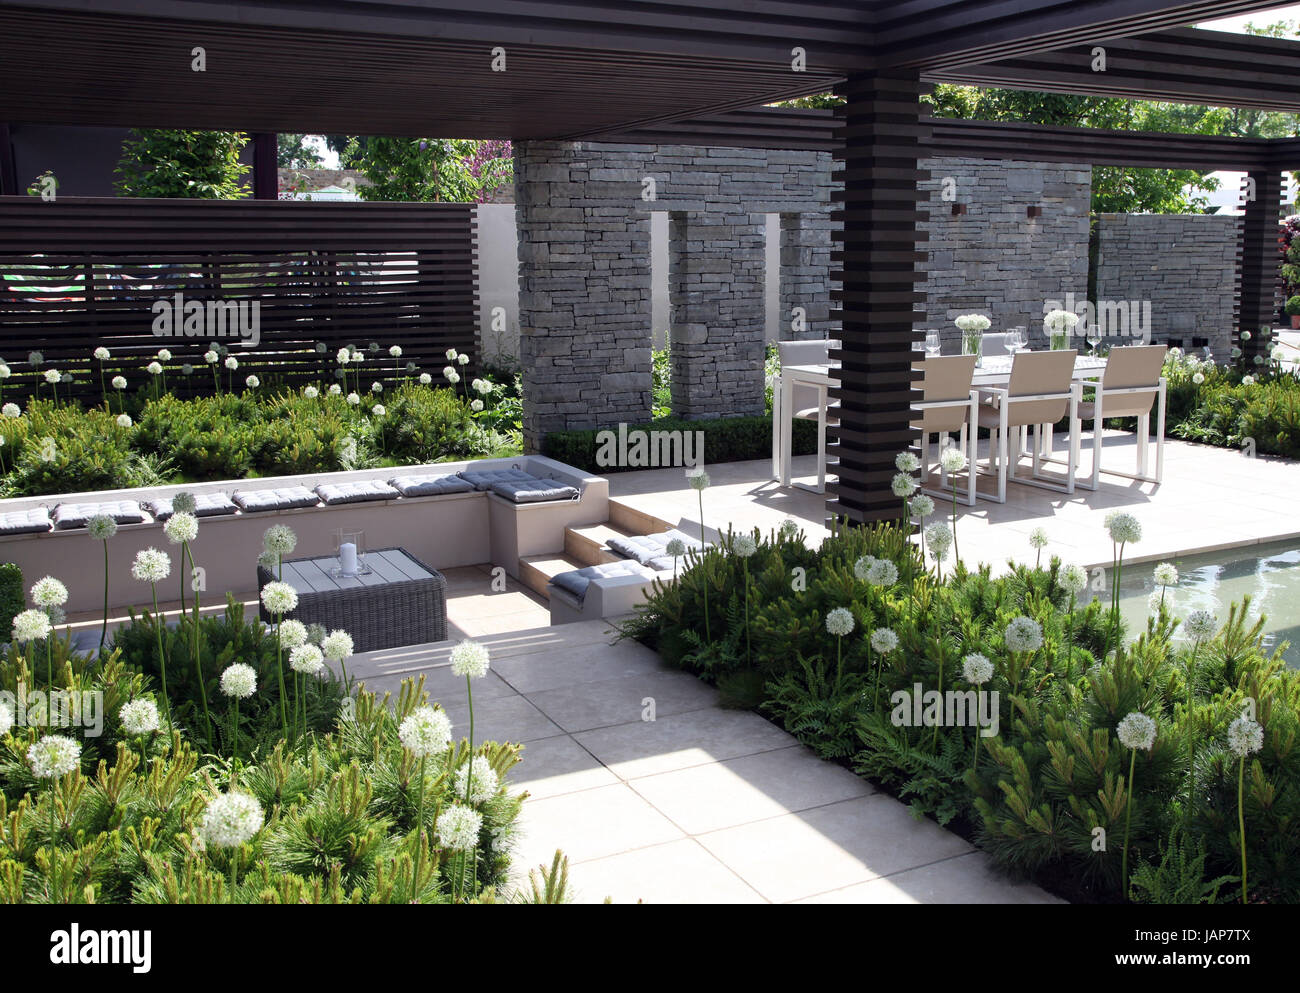 Savill’s Urban Retreat, Show Garden at Bloom designed by Alan Rudden Stock Photo